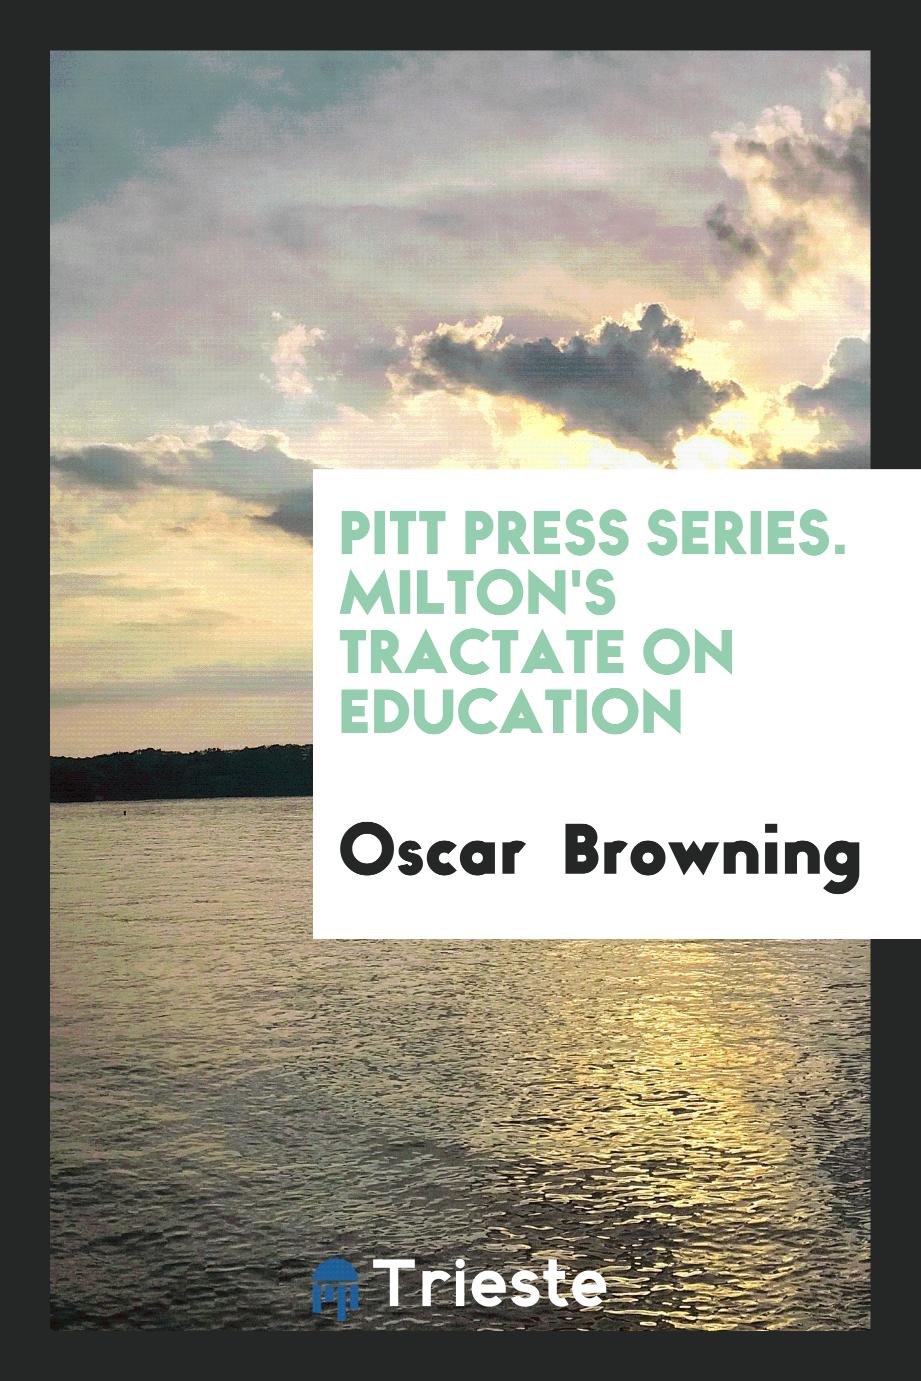 Pitt press series. Milton's Tractate on Education